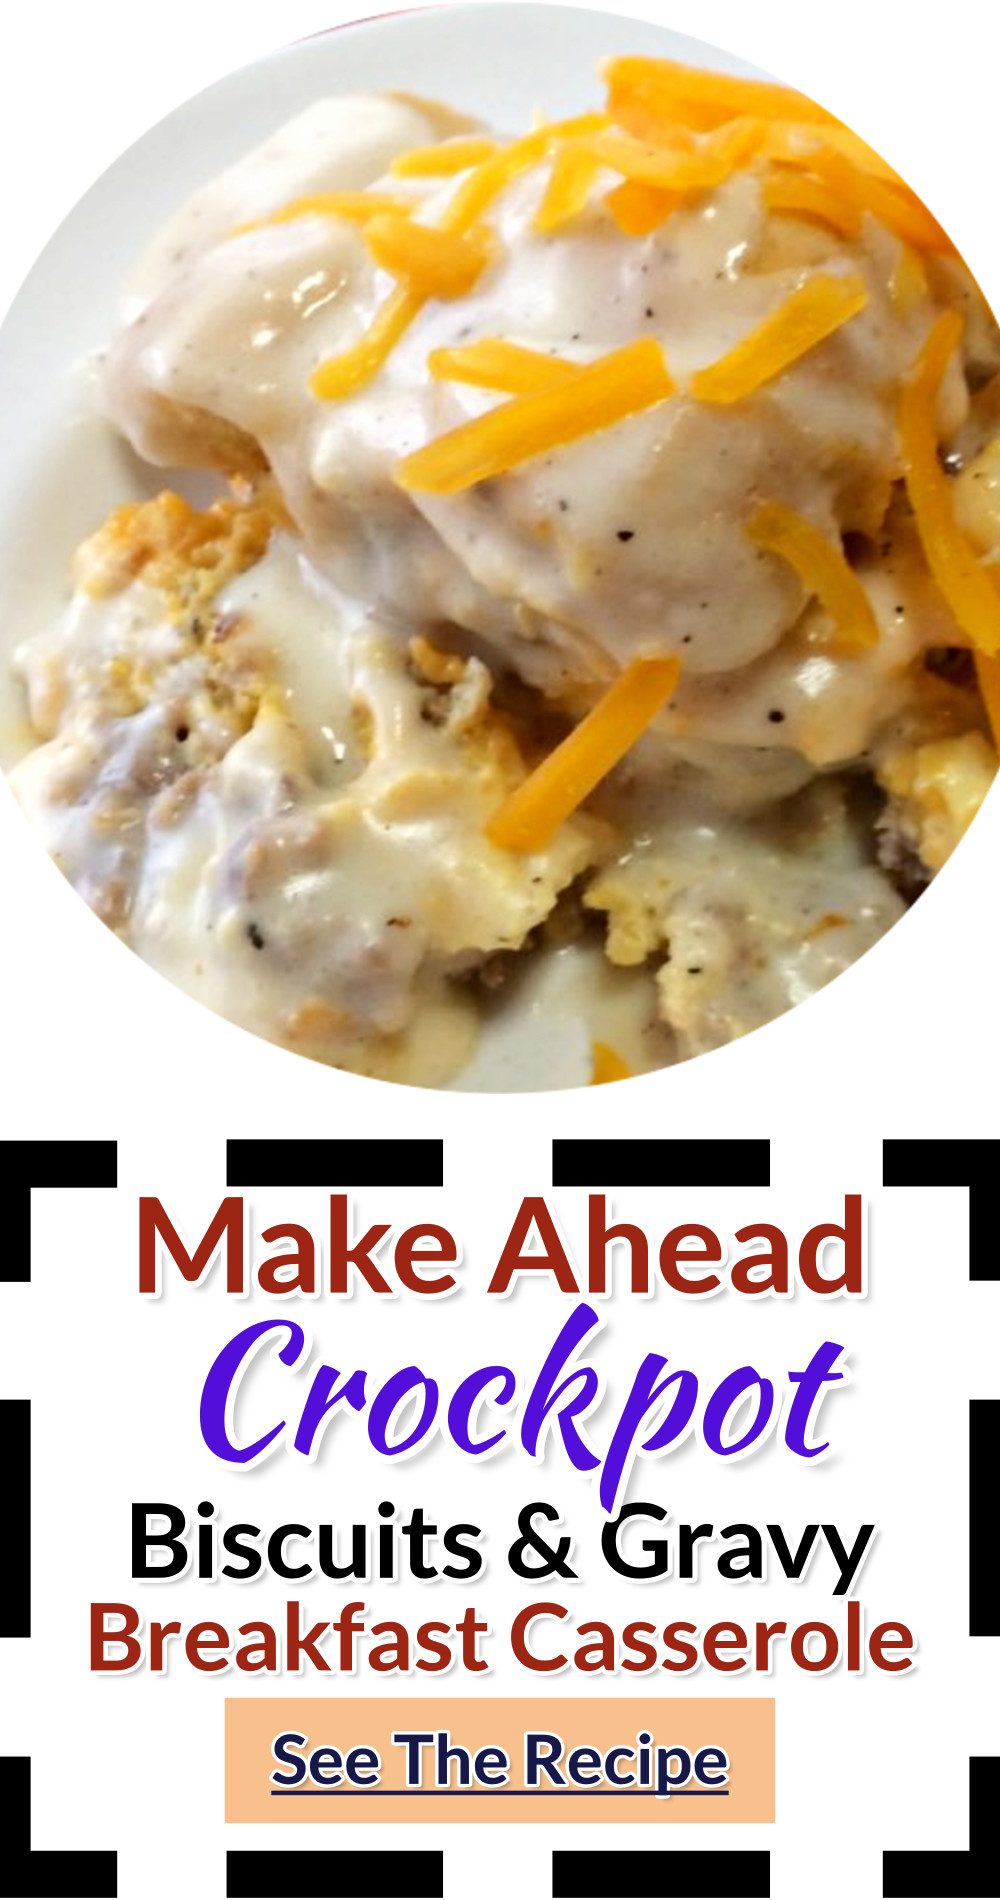 Make ahead crockpot biscuits and gravy breakfast casserole